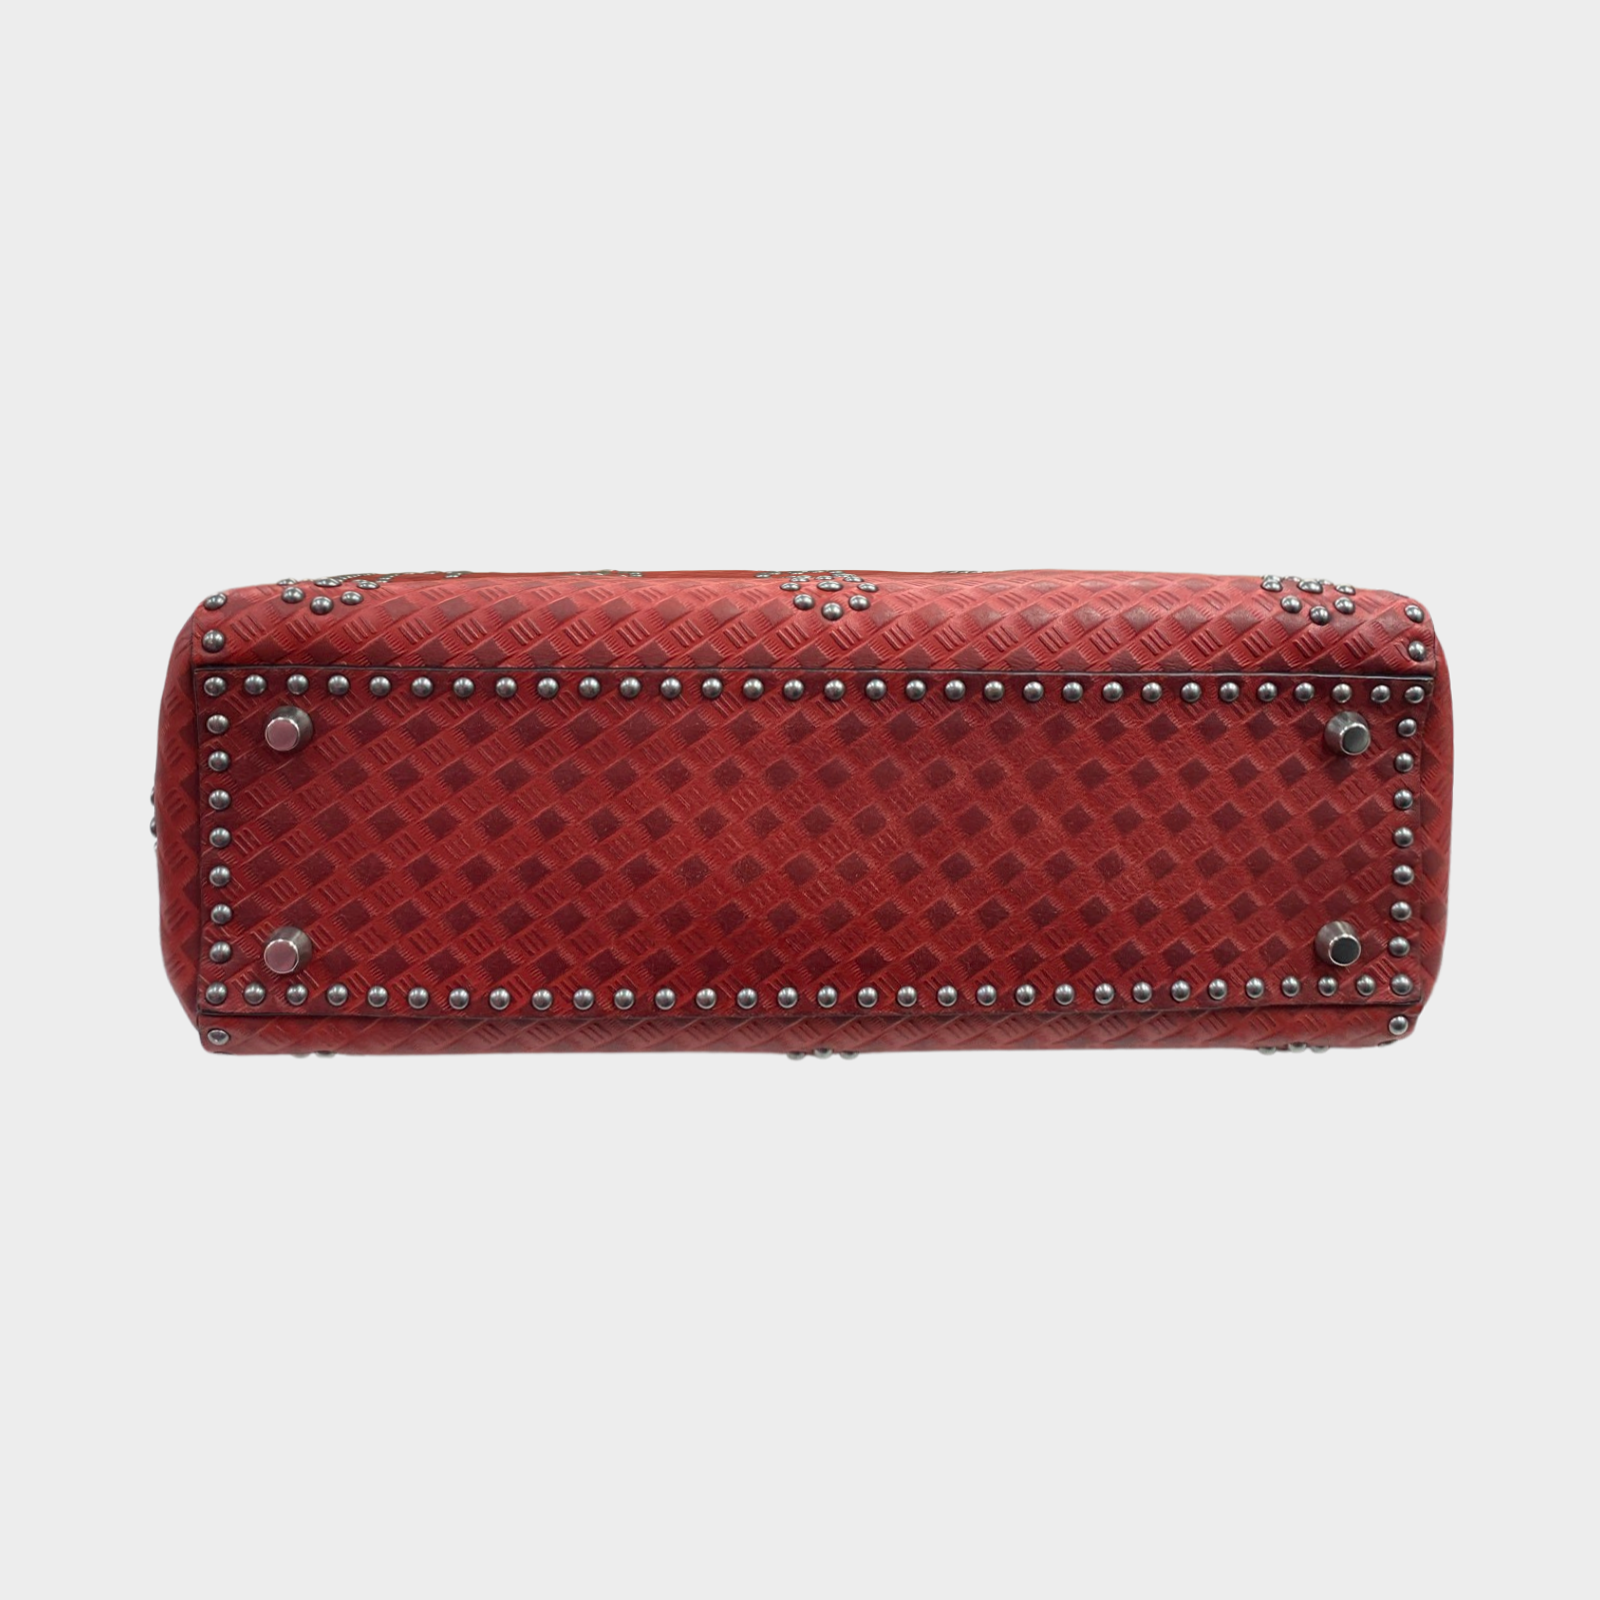 Dior saddle bag red | Bags, Dior saddle bag, Dior